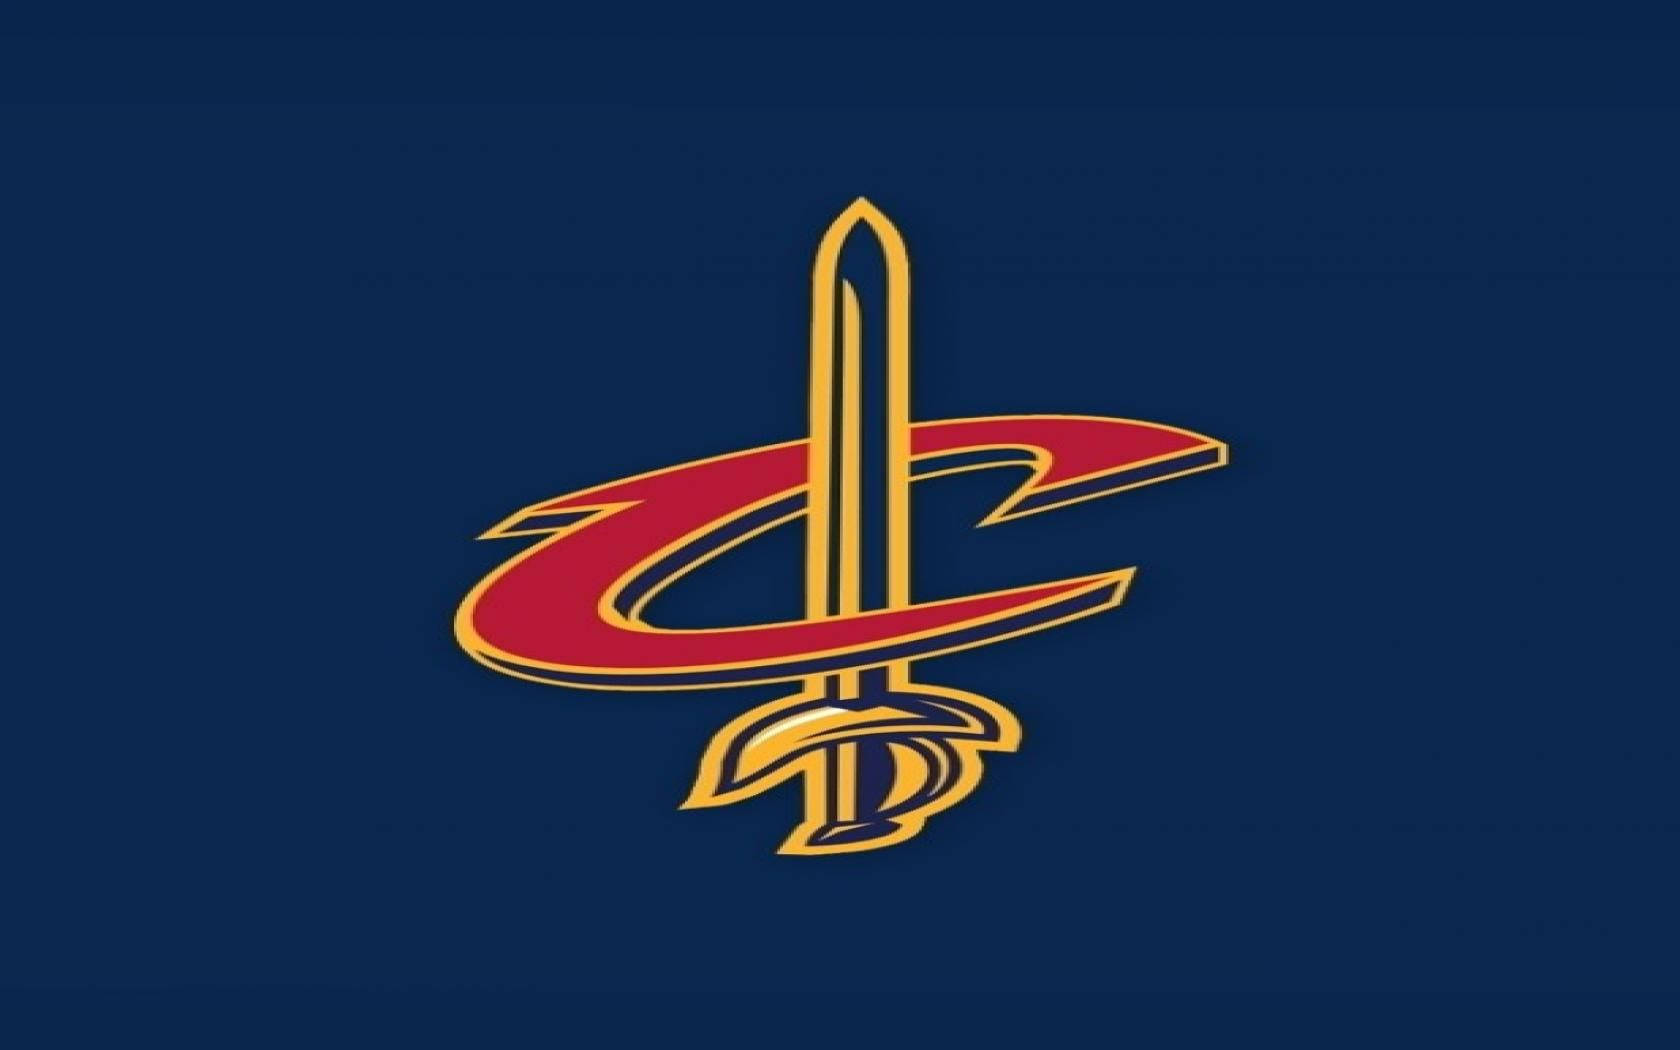 Cool Nba Cleveland Cavaliers Emblem Wallpaper